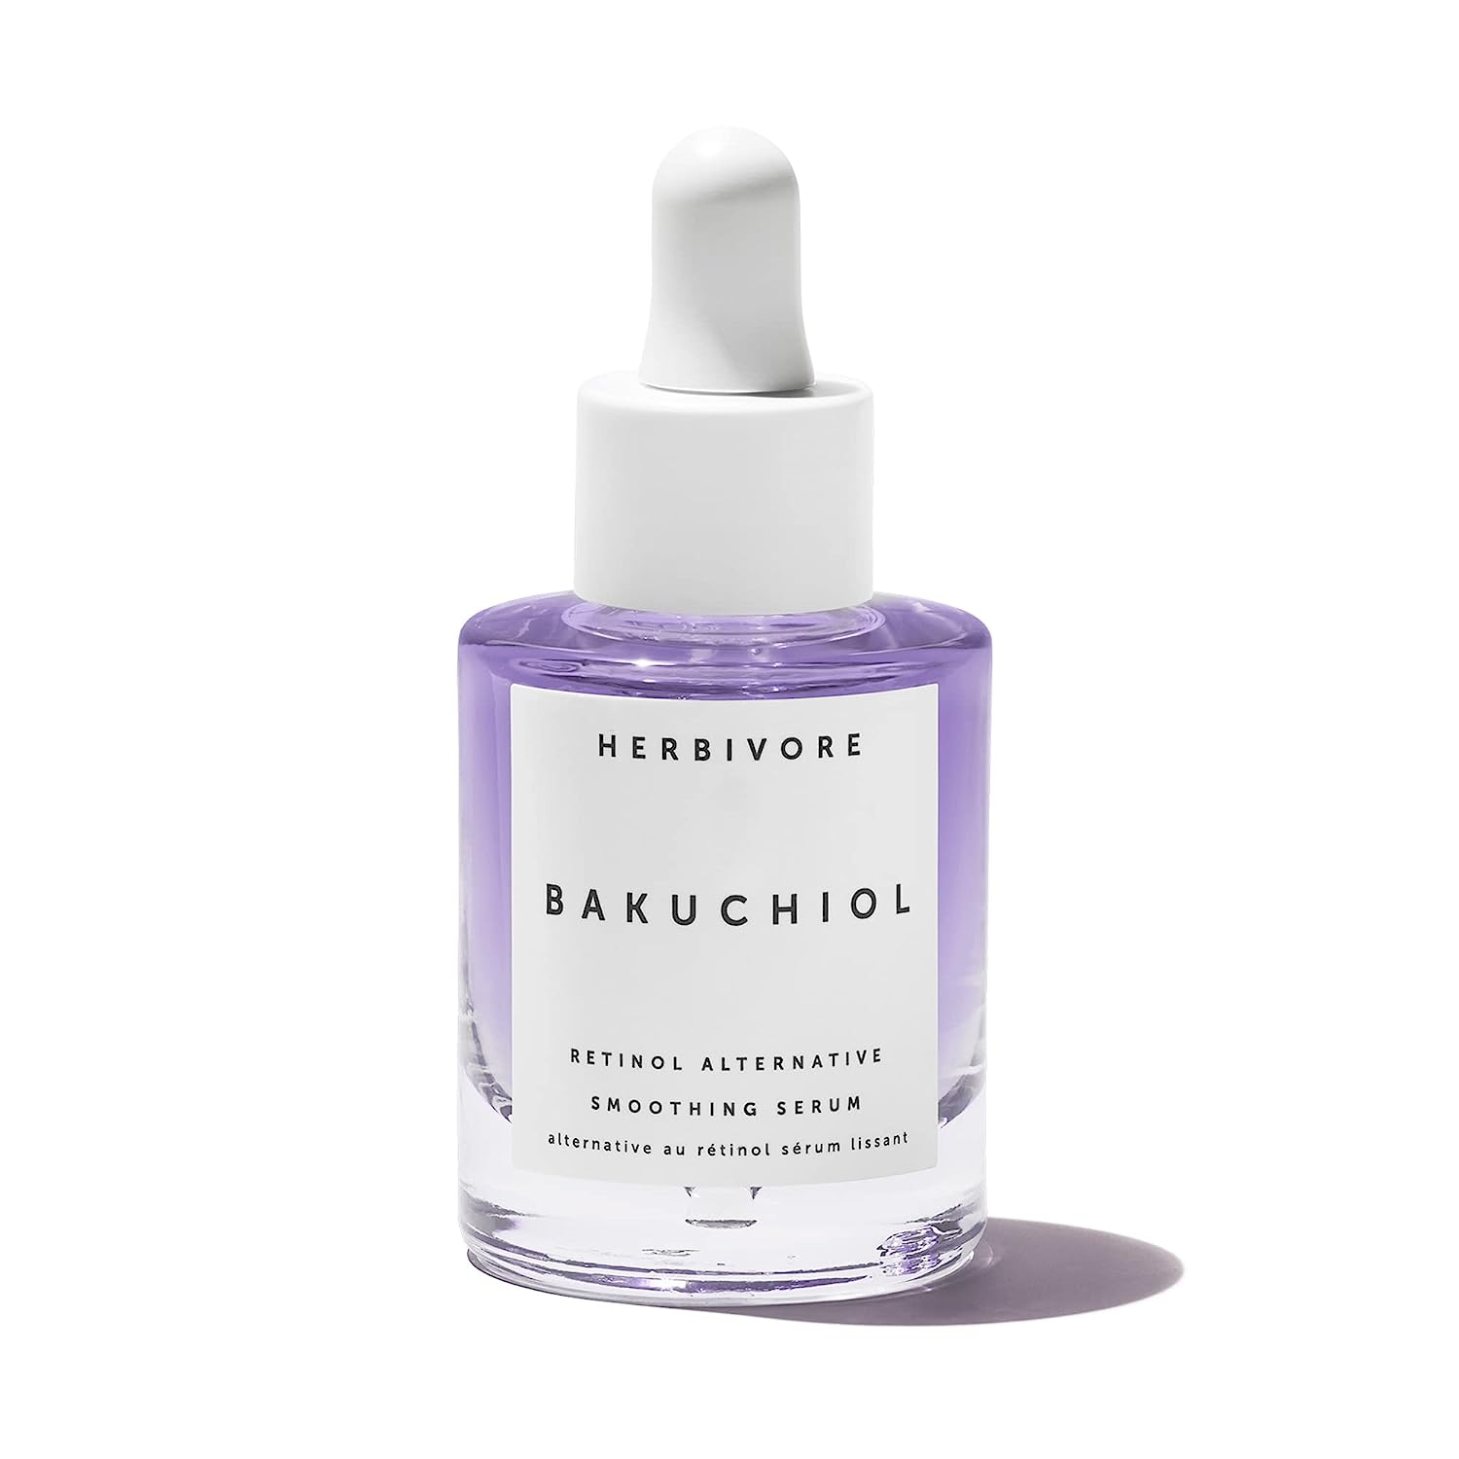 herbivore bakuchiol retinol alternative face serum